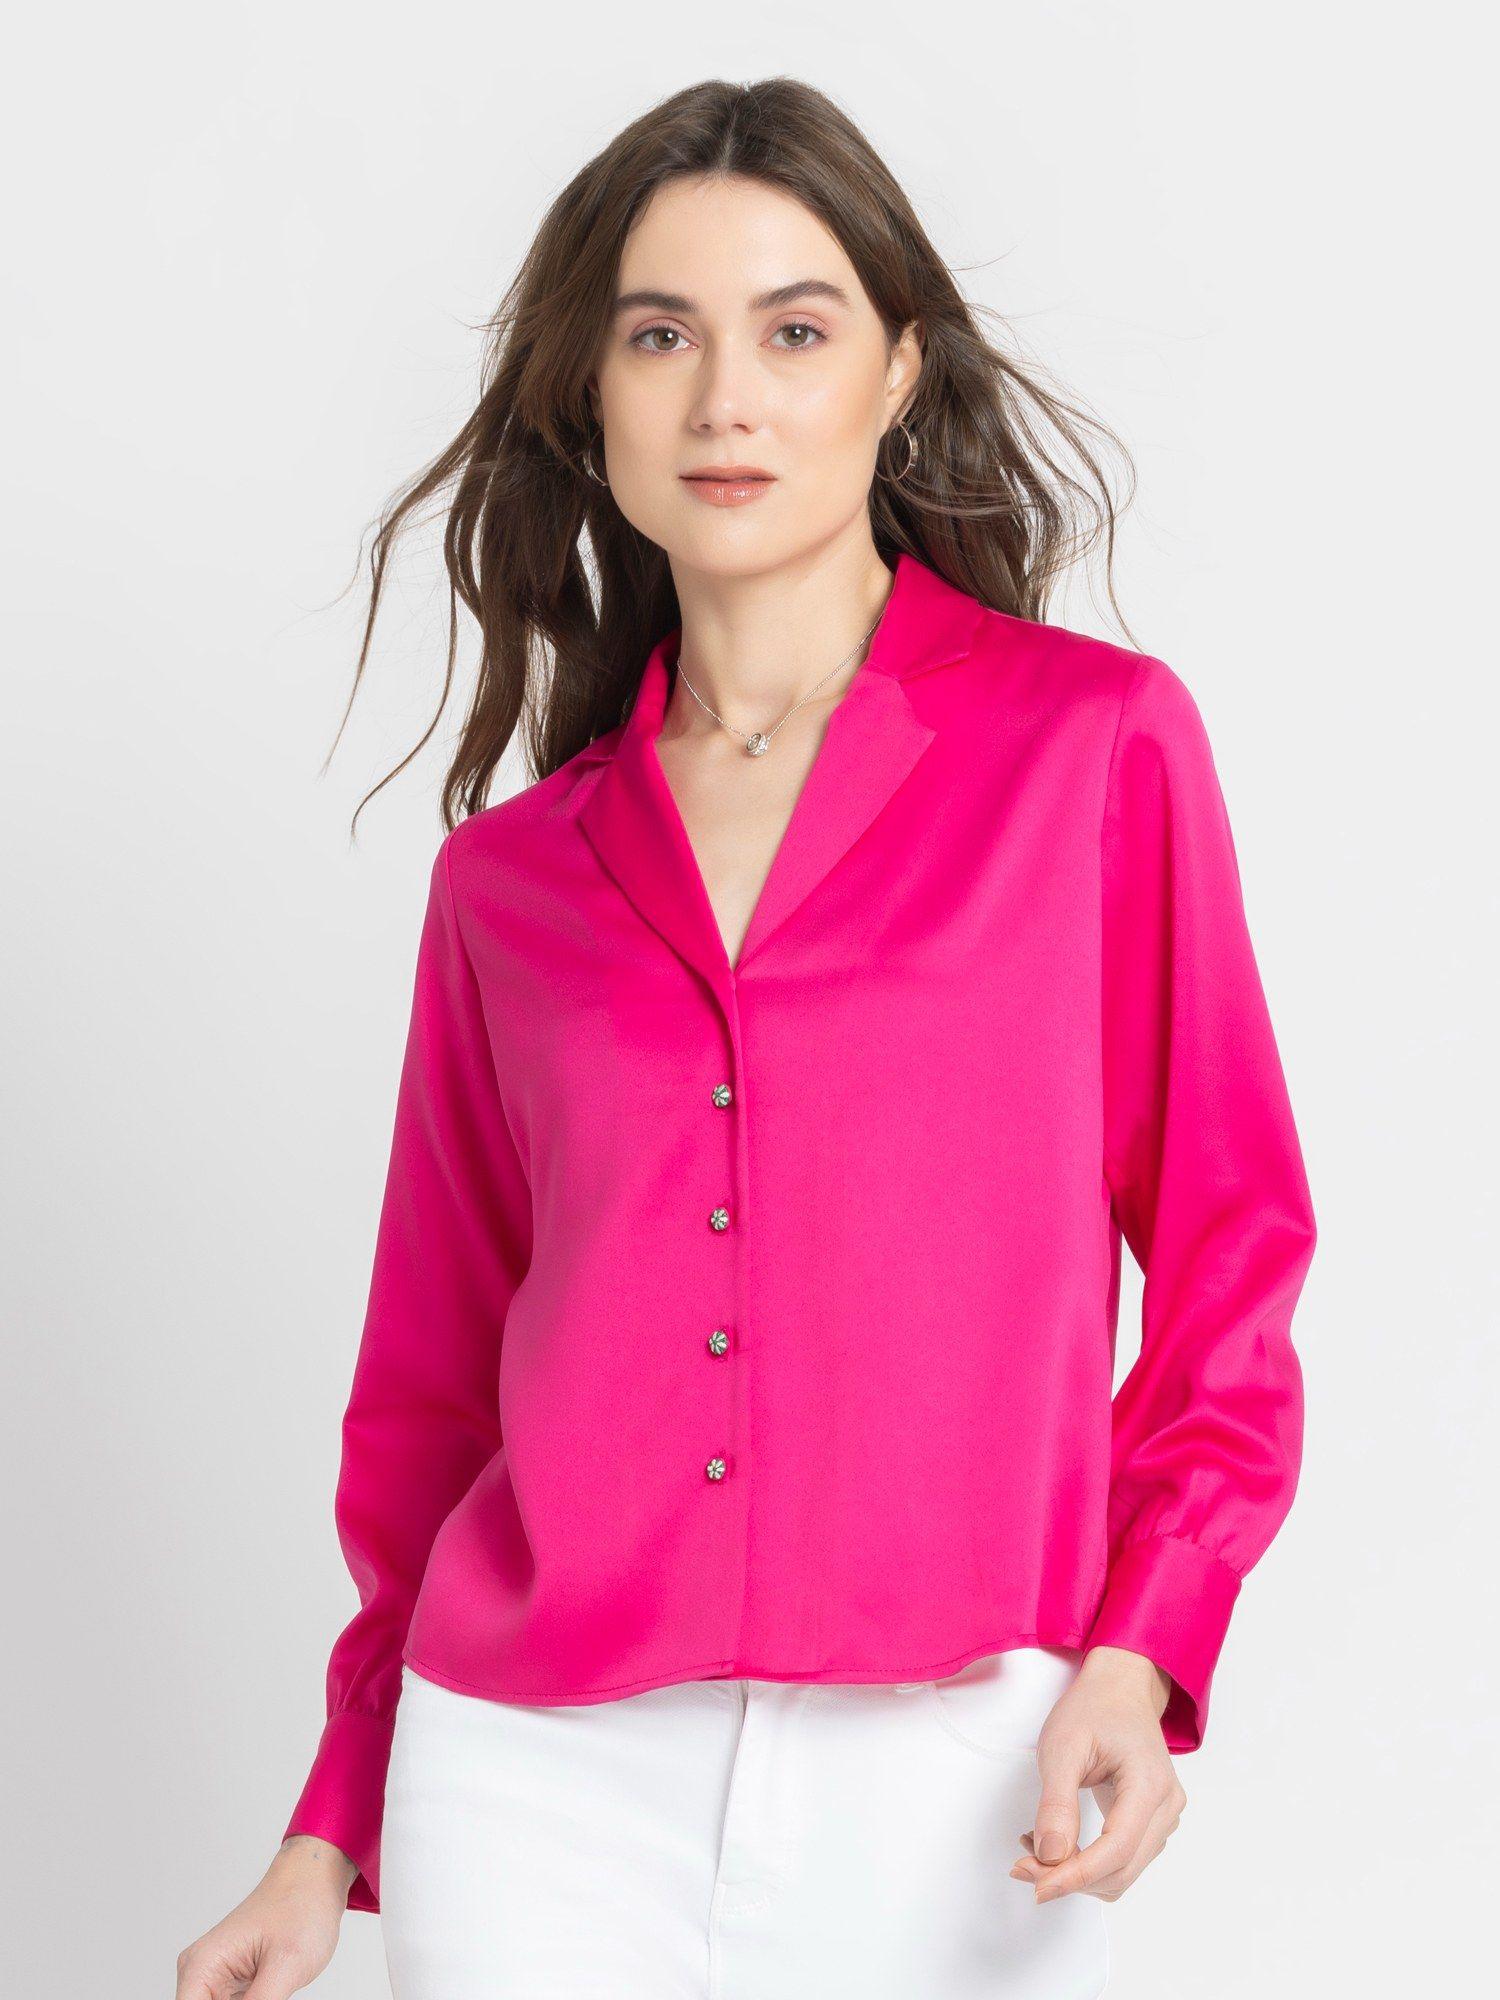 notch collar fuchsia pink solid long sleeves casual shirt for women